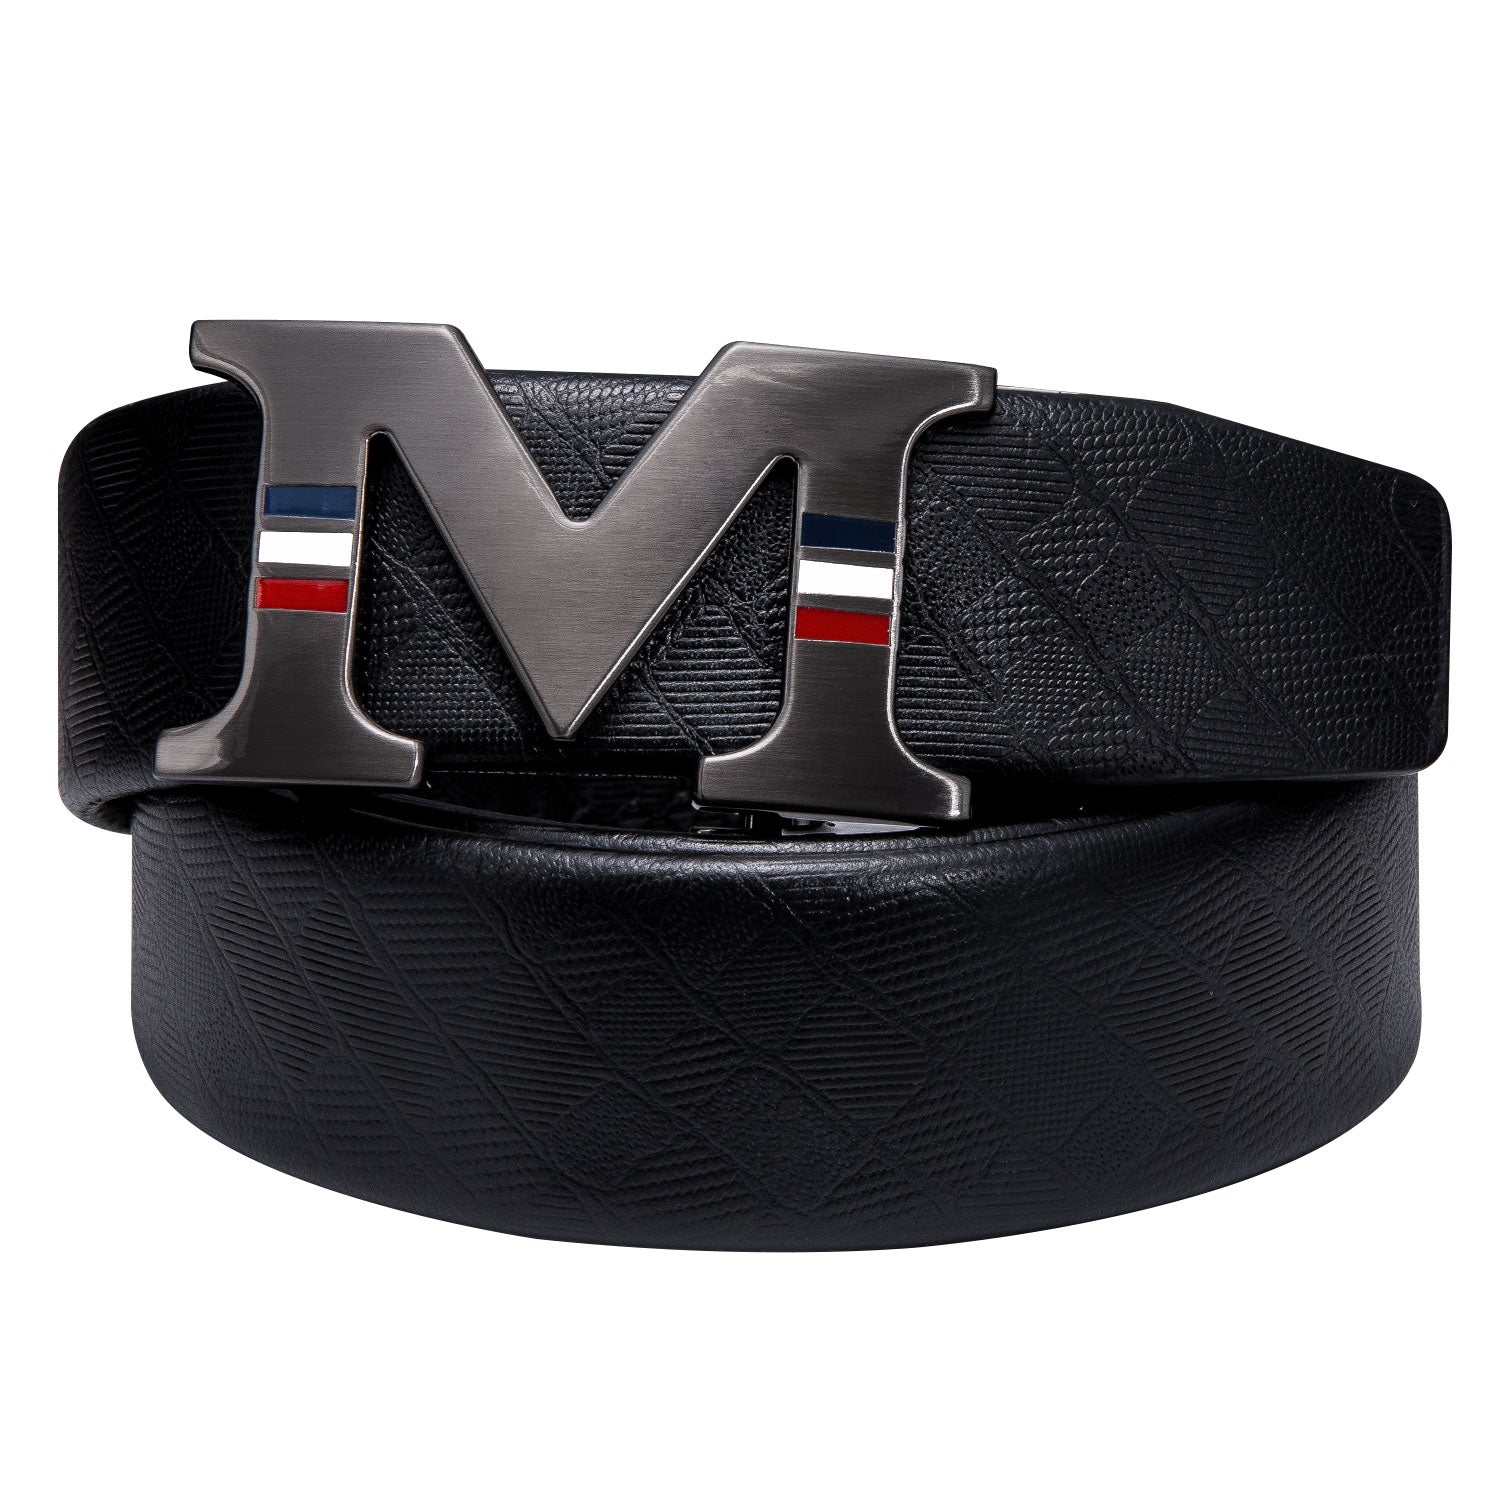 Barry.wang Men's Belt With M Letter Metal Buckle Genuine Leather Belt